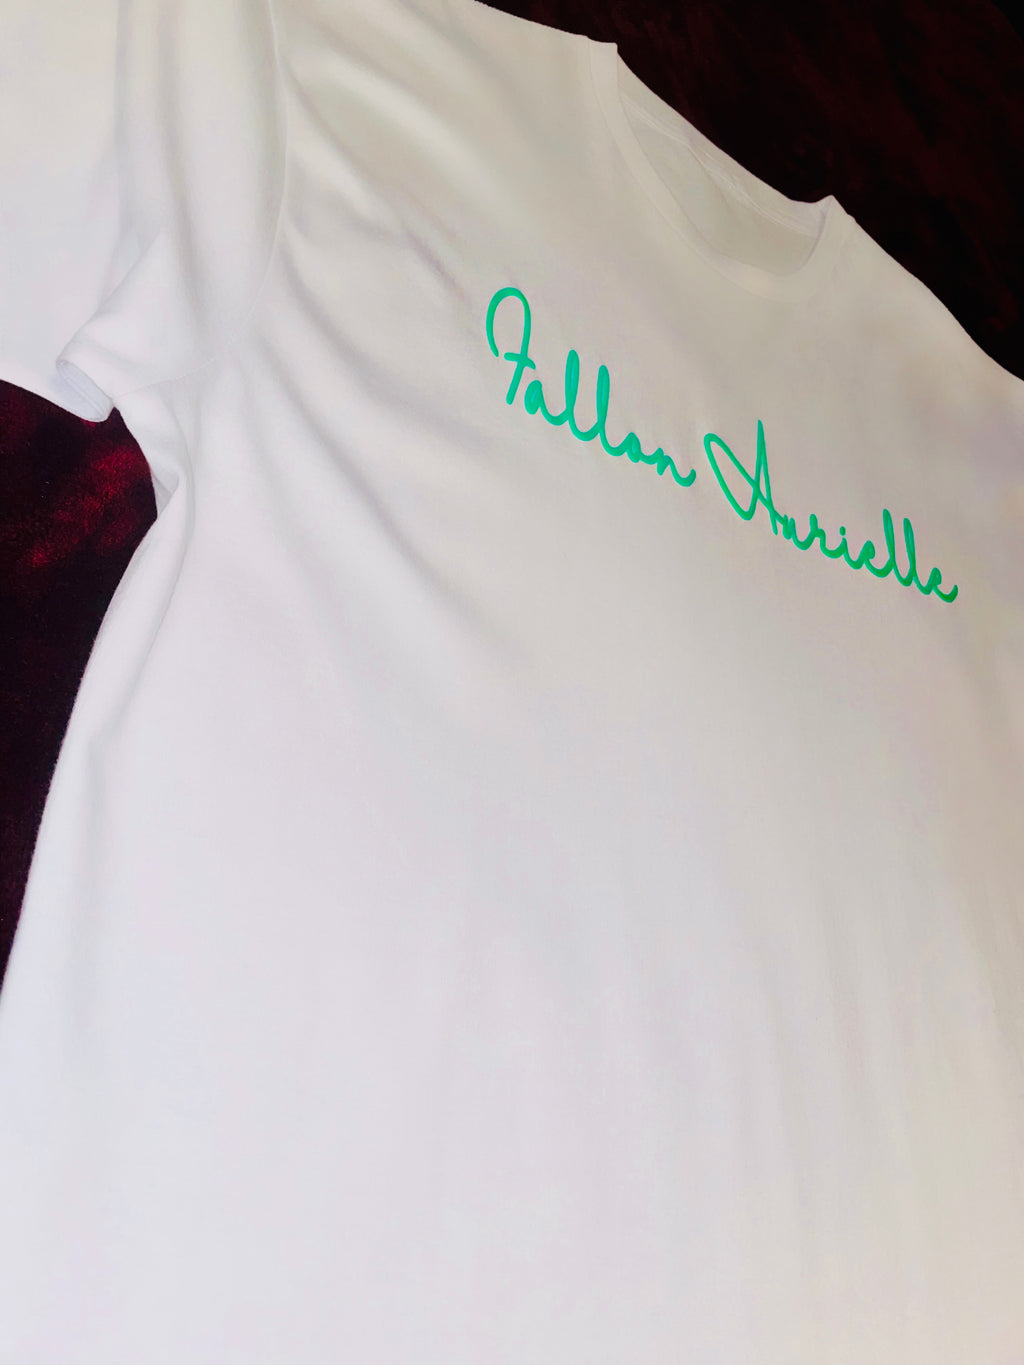 Fallon Aurielle Unisex Signature T-Shirt (White & Lime Green)